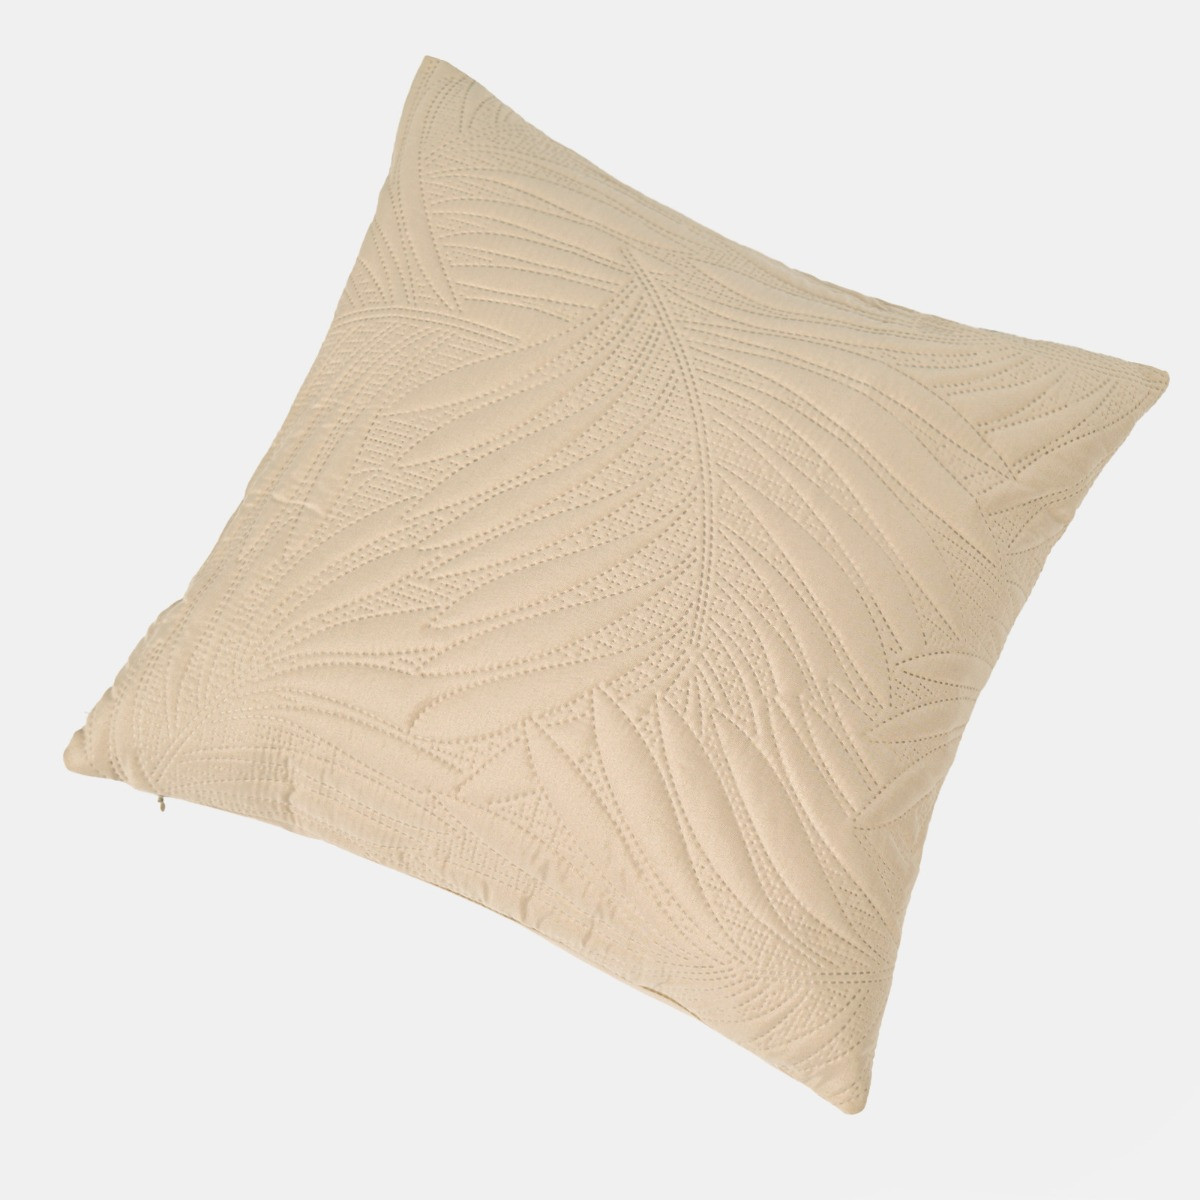 OHS Leaf Pinsonic Cushion Covers, Beige - 2 Pack>